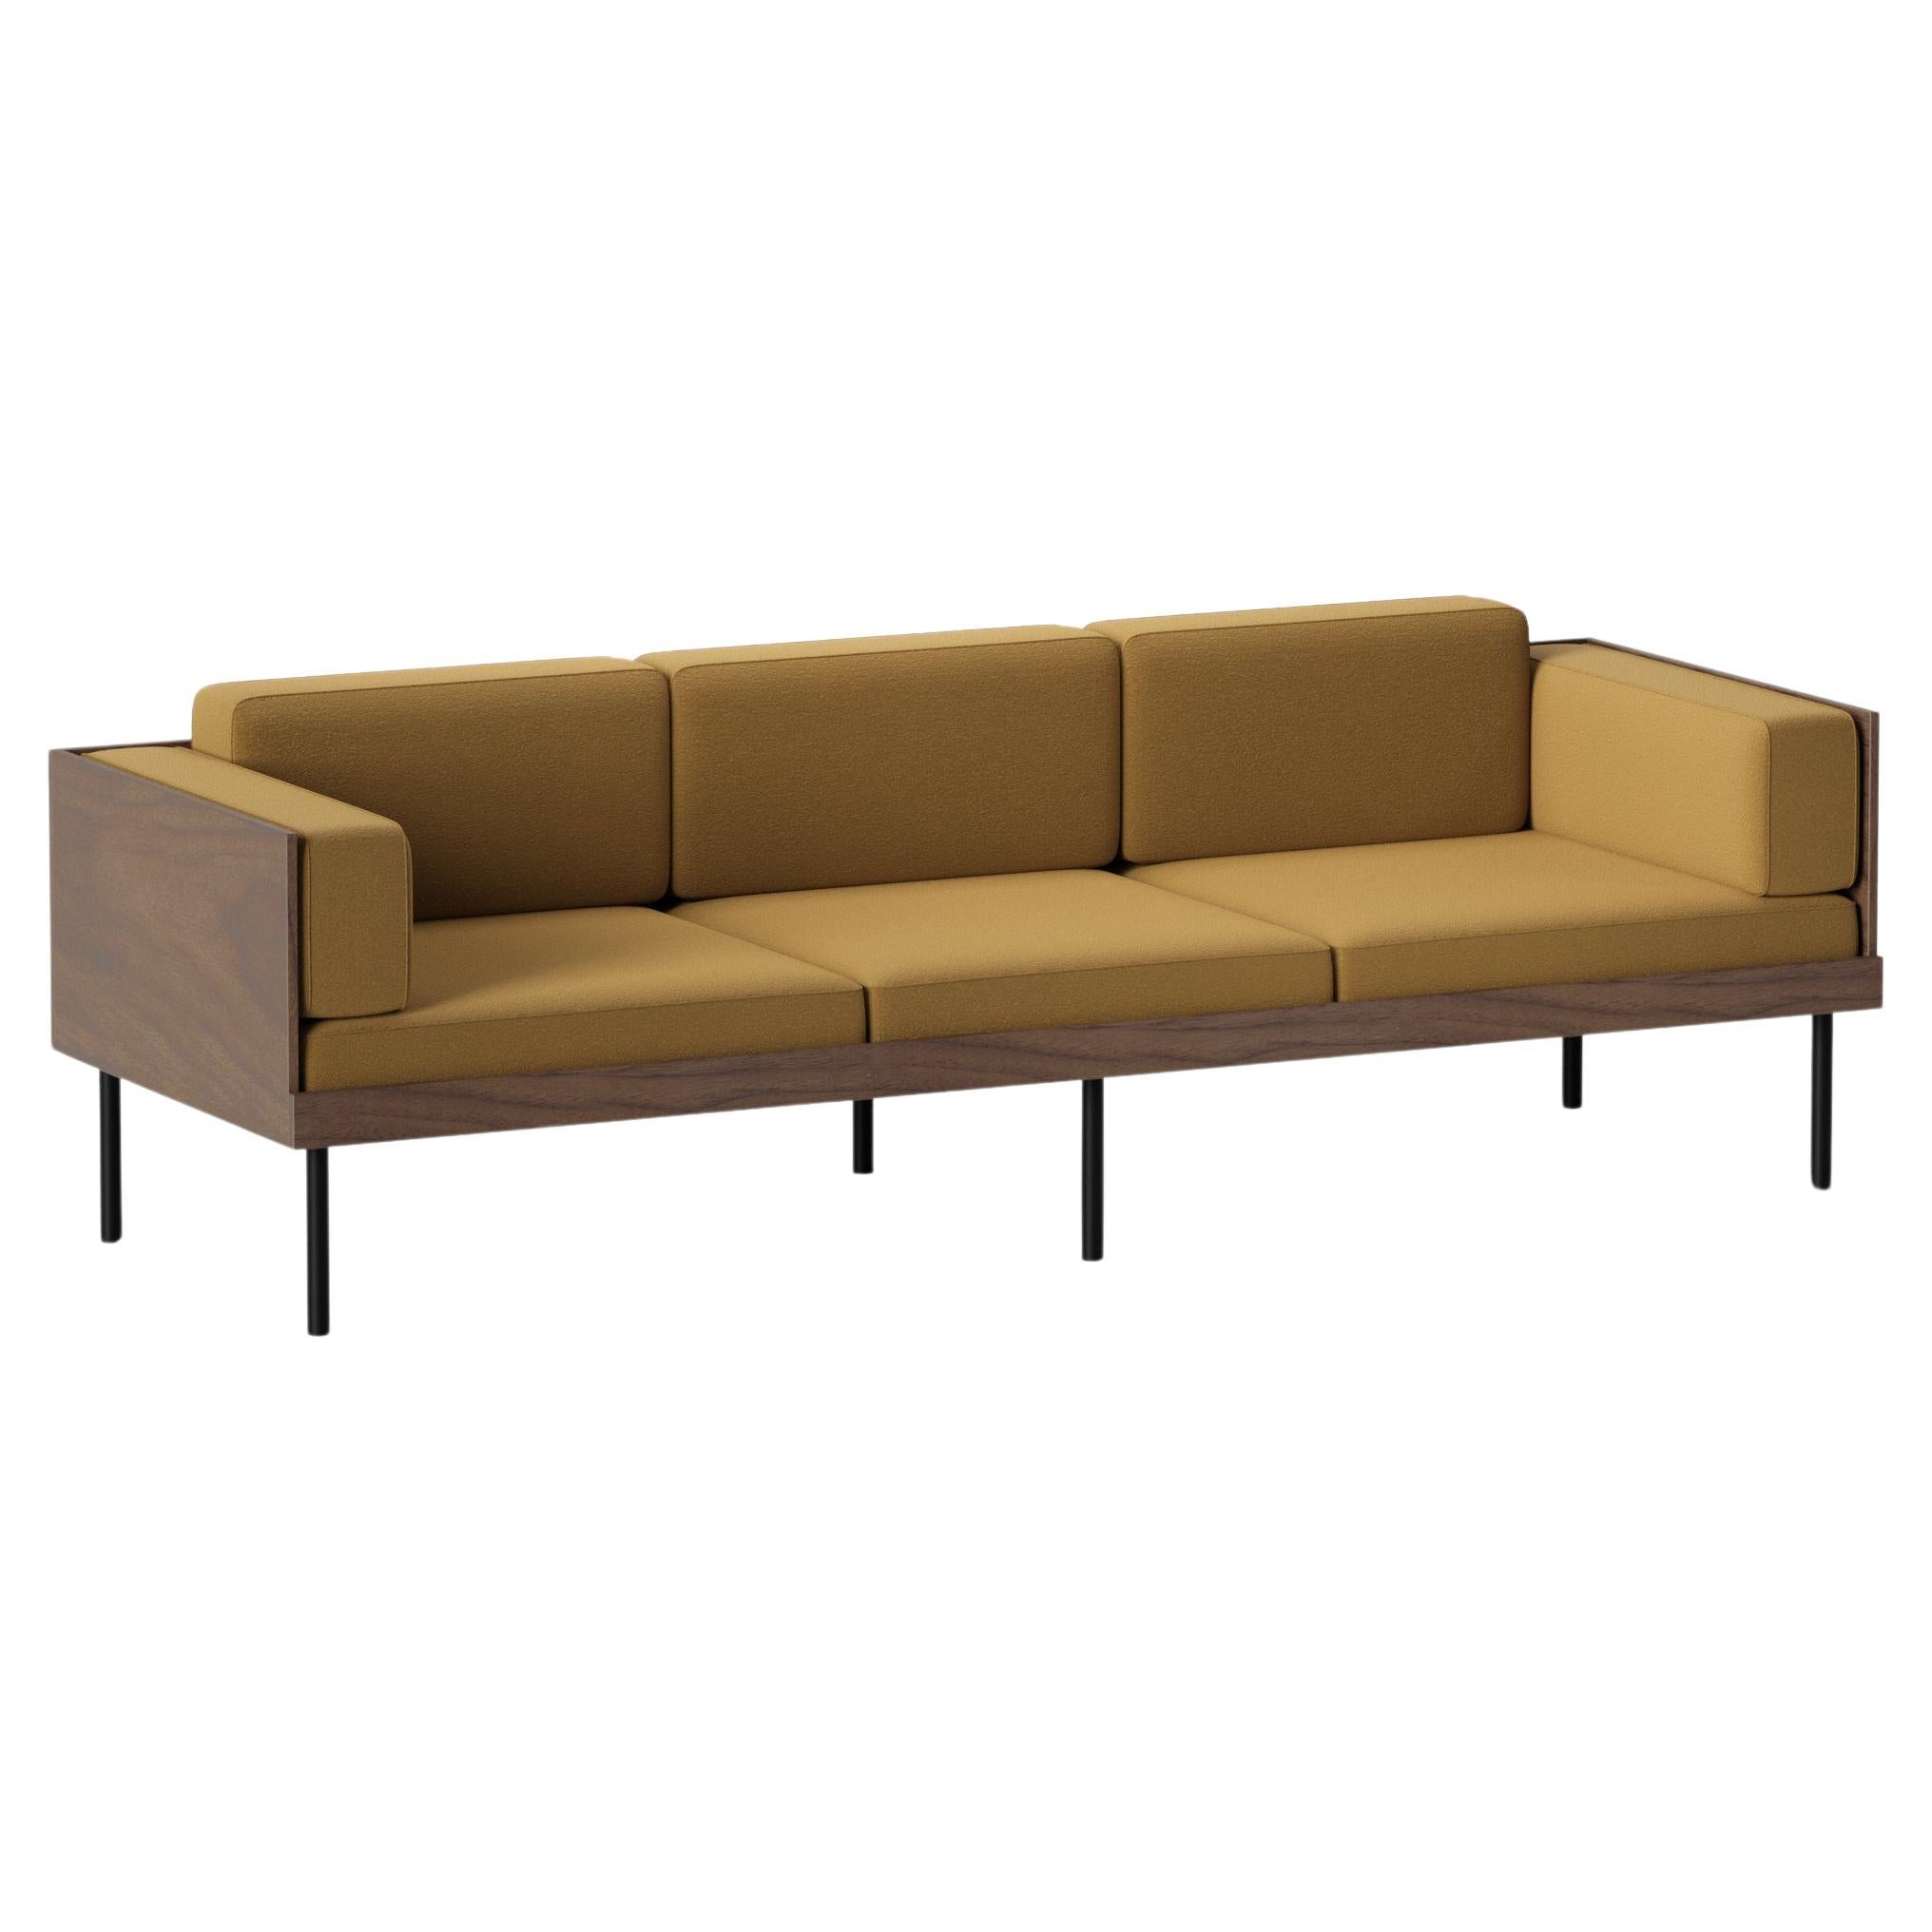 Ochre Cut Sofa by Kann Design